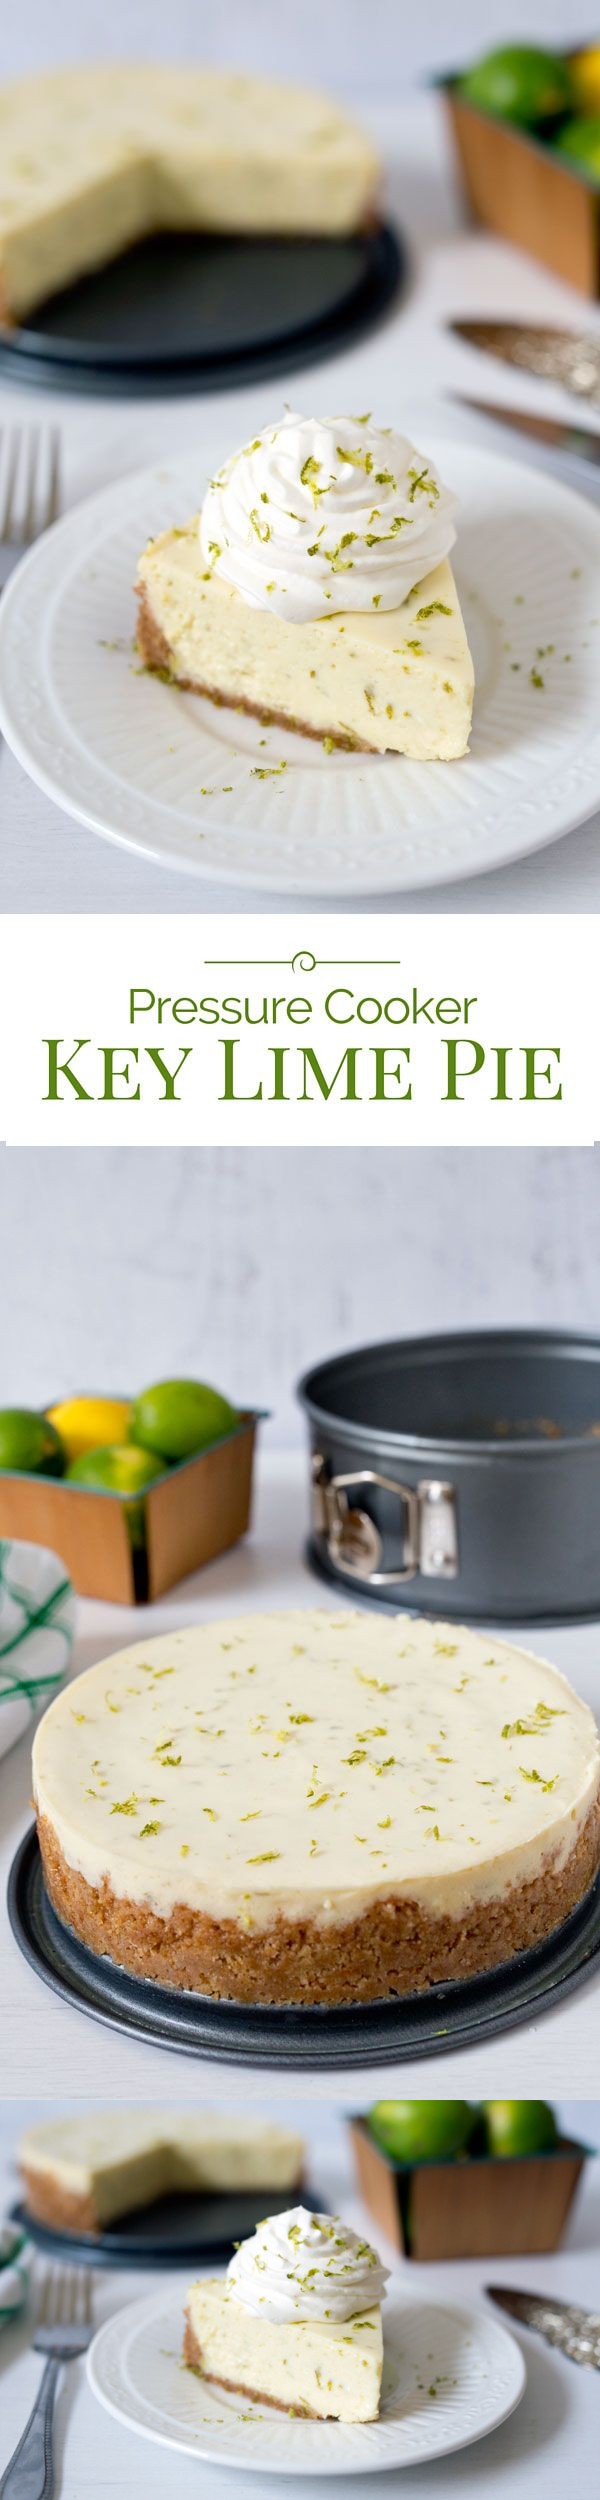 Pressure Cooker Key Lime Pie